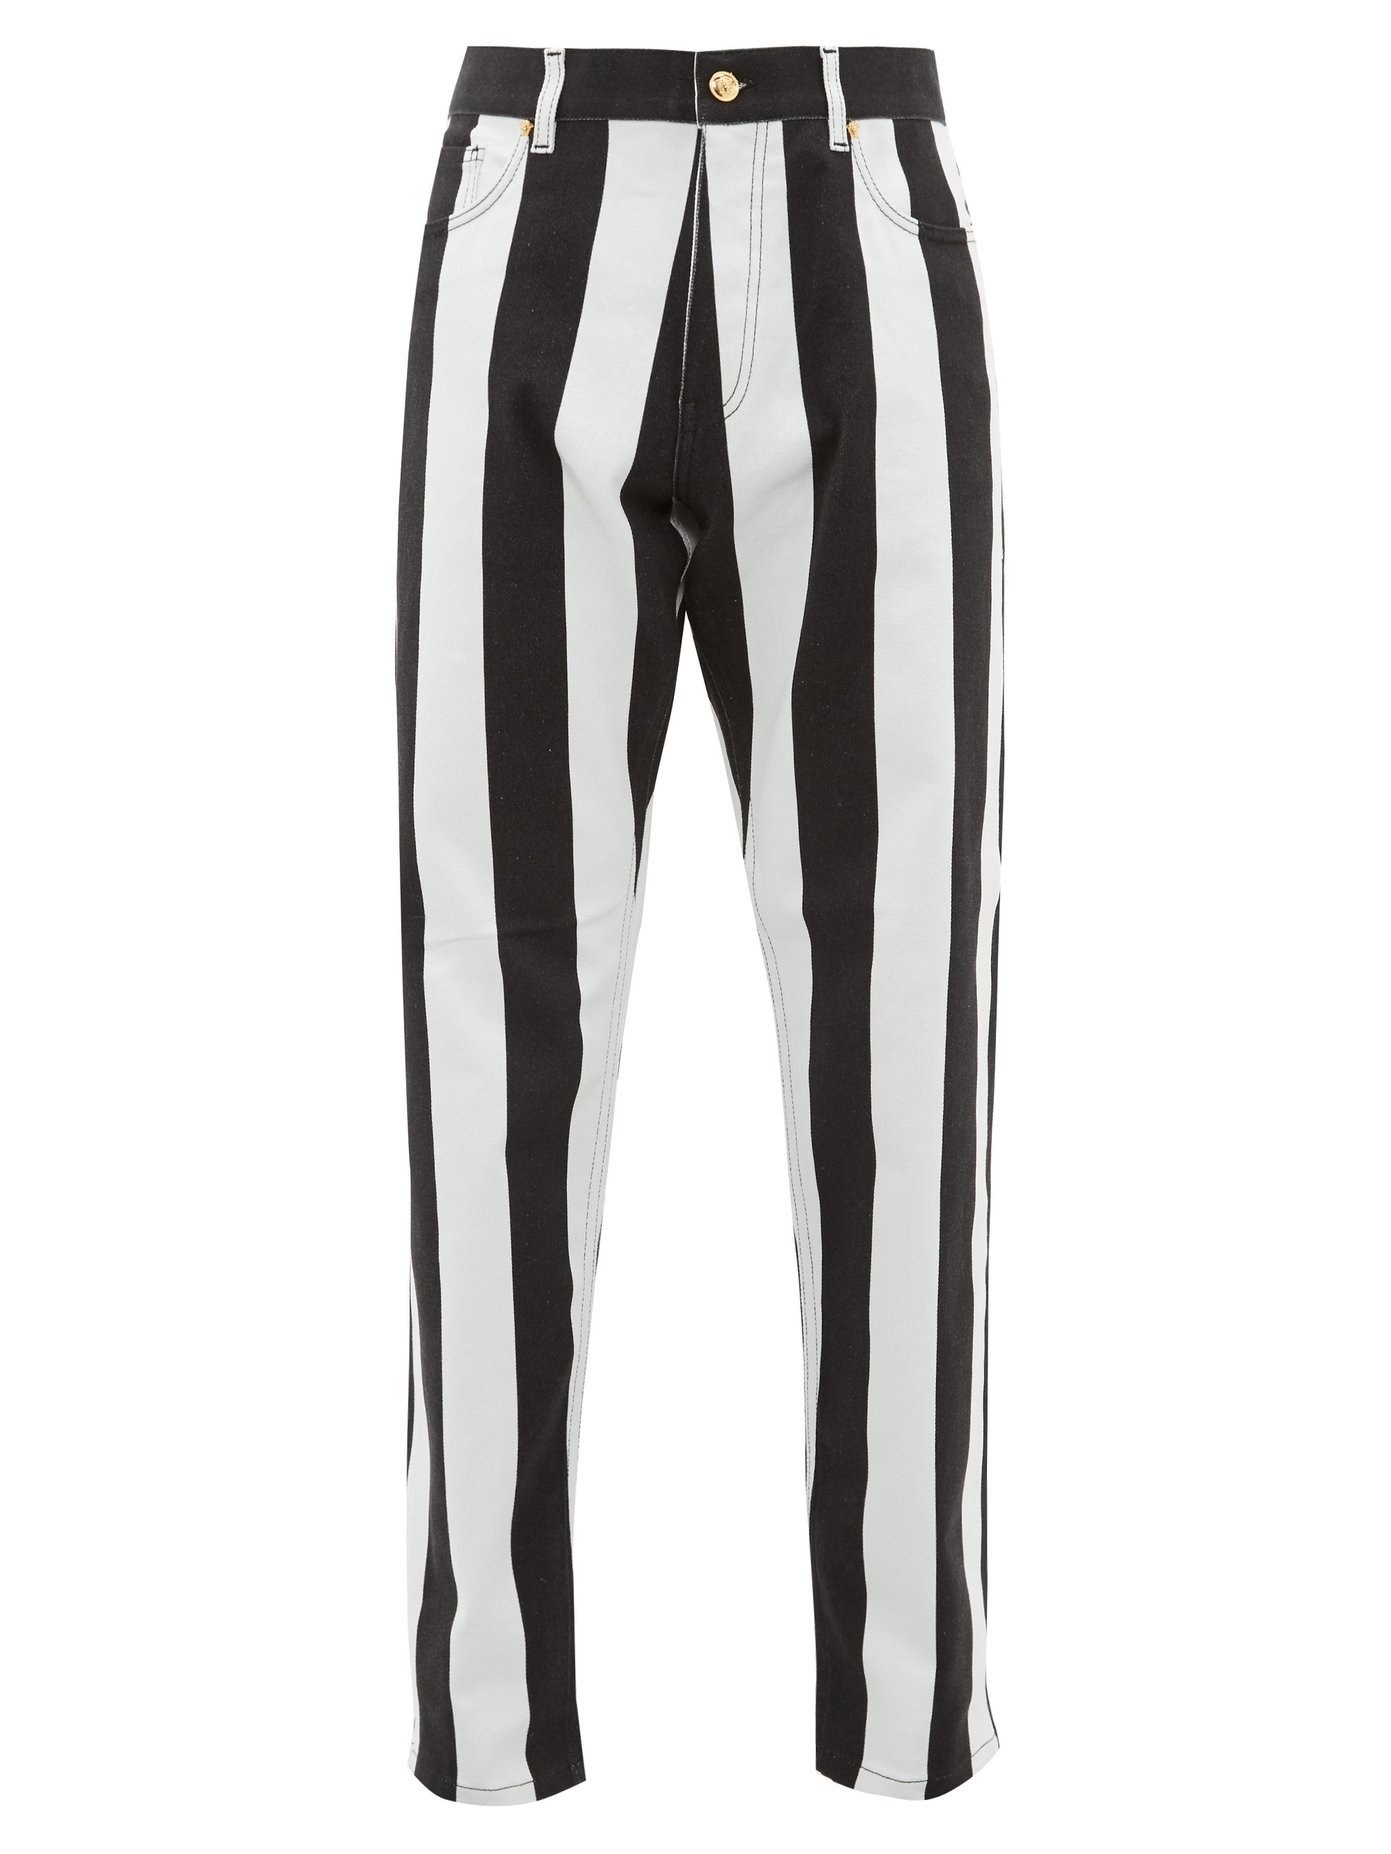 black and white striped pants australia